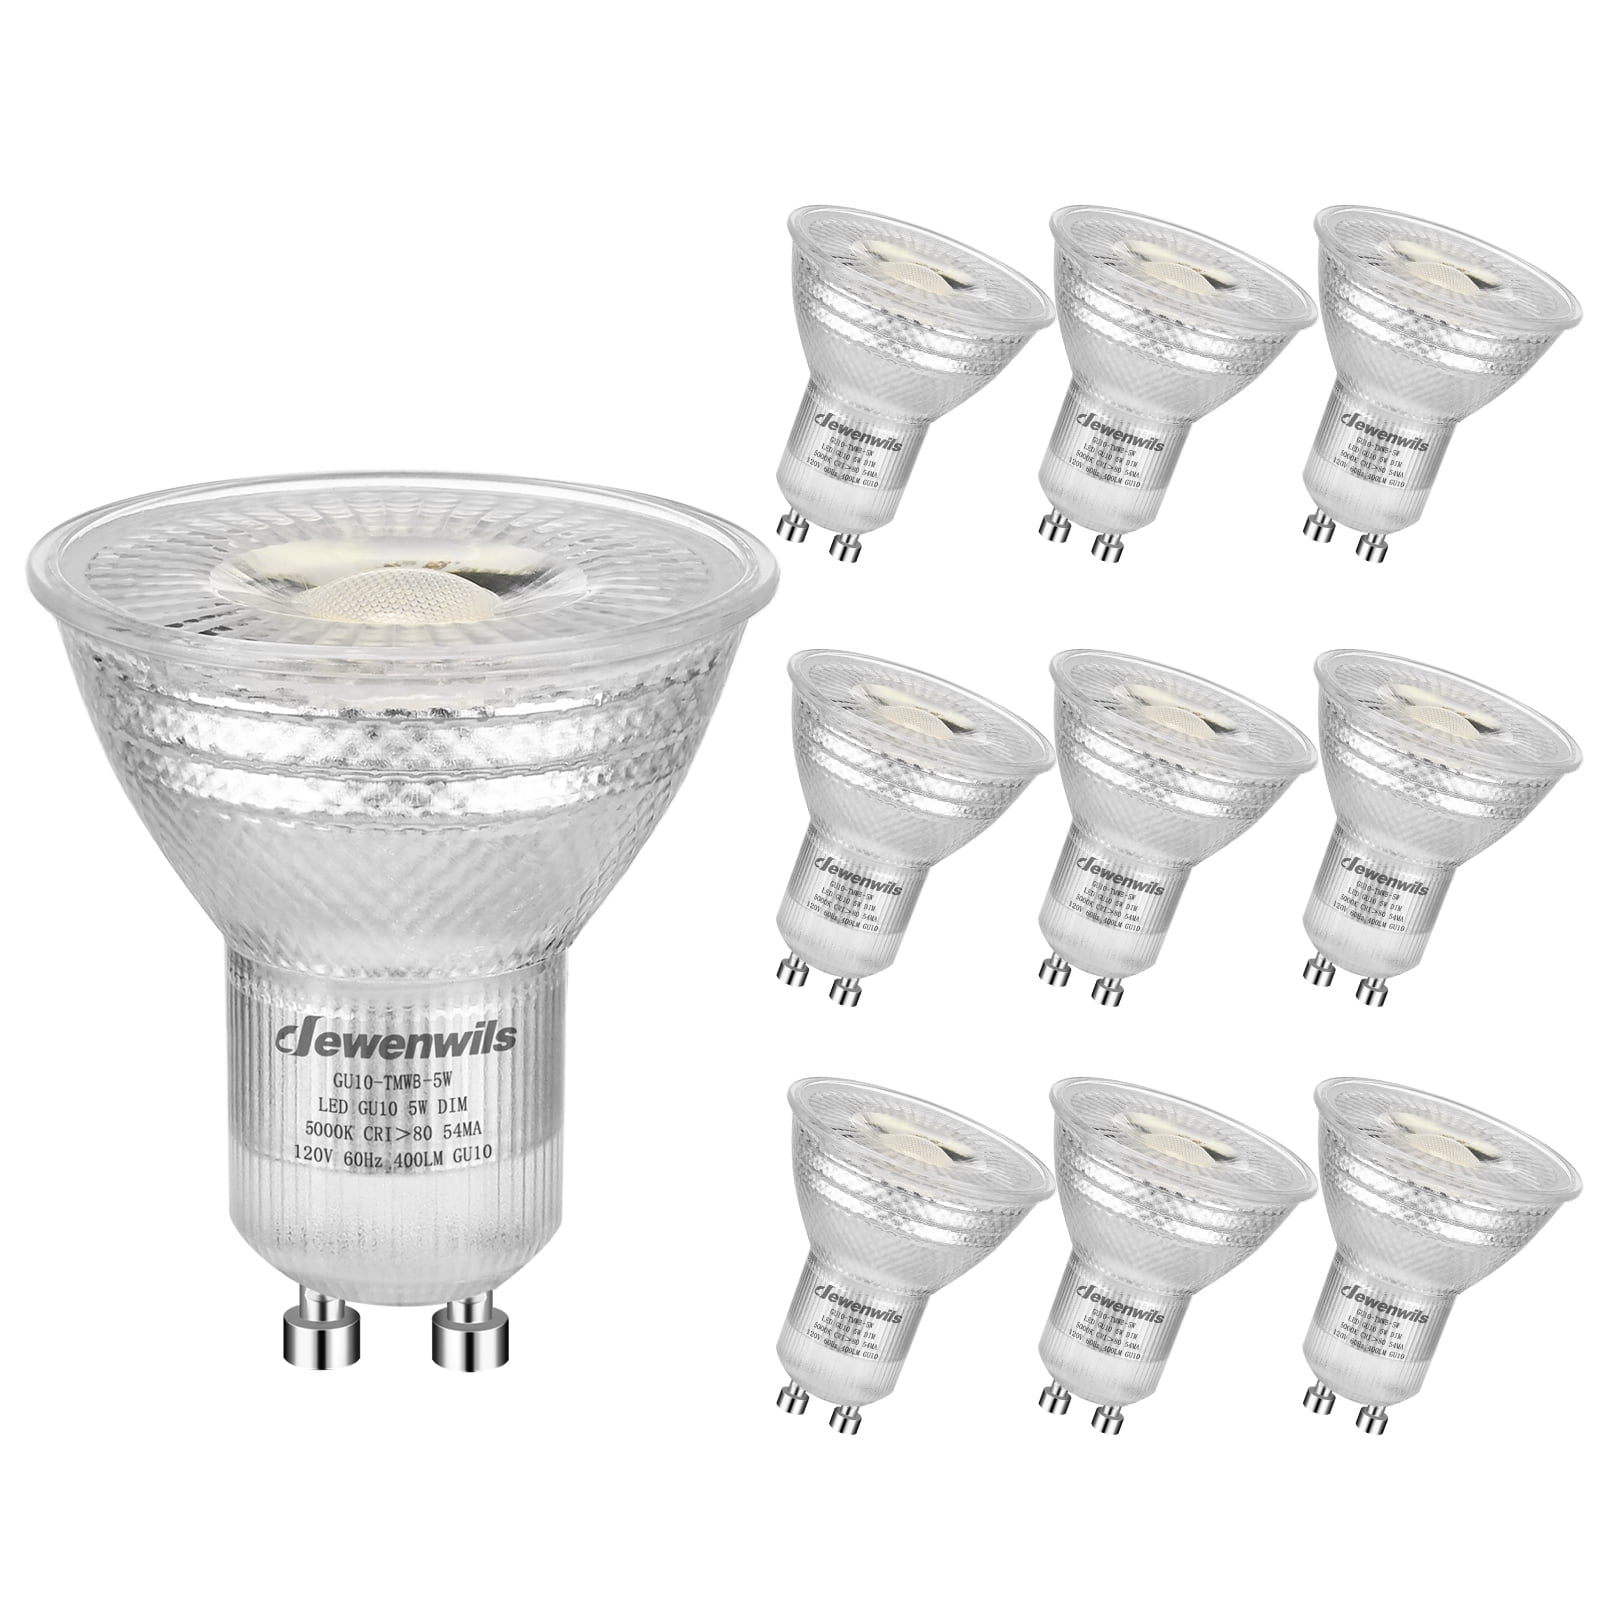 GU10 LED Bulbs 5 Watt Dimmable Light Lamps Warm White Downlights spot light 